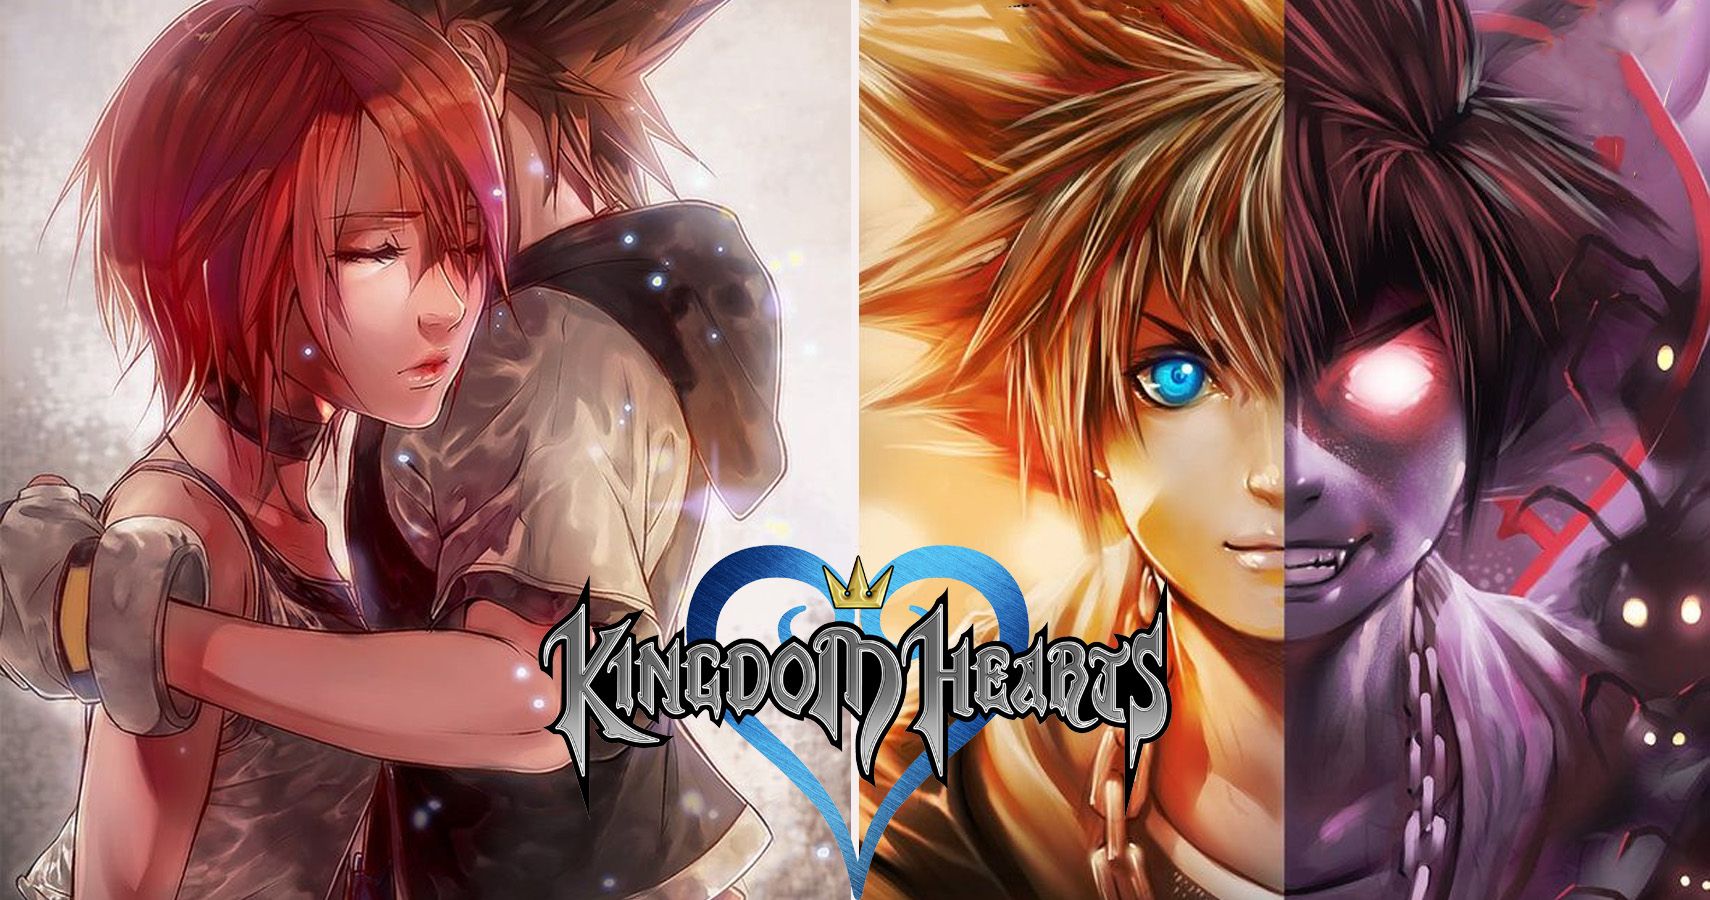 15 Things About Kingdom Hearts Square Enix Keeps Secret